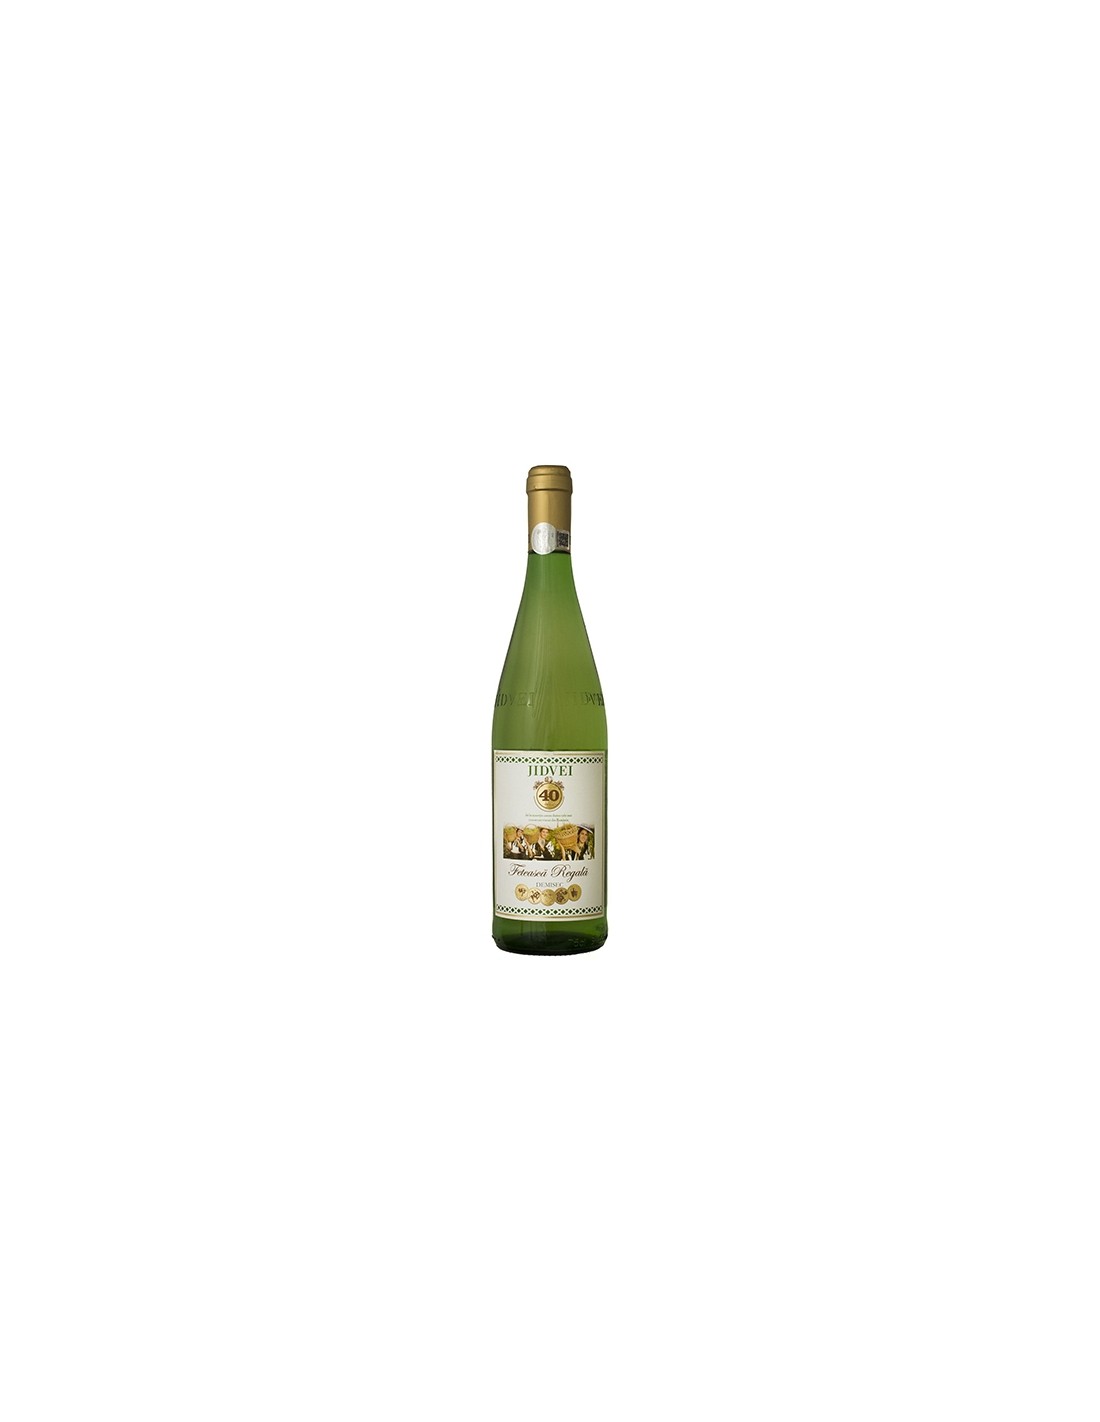 Vin alb demisec, Feteasca Regala, Jidvei Tarnave, 0.75L, 11.5% alc., Romania alcooldiscount.ro